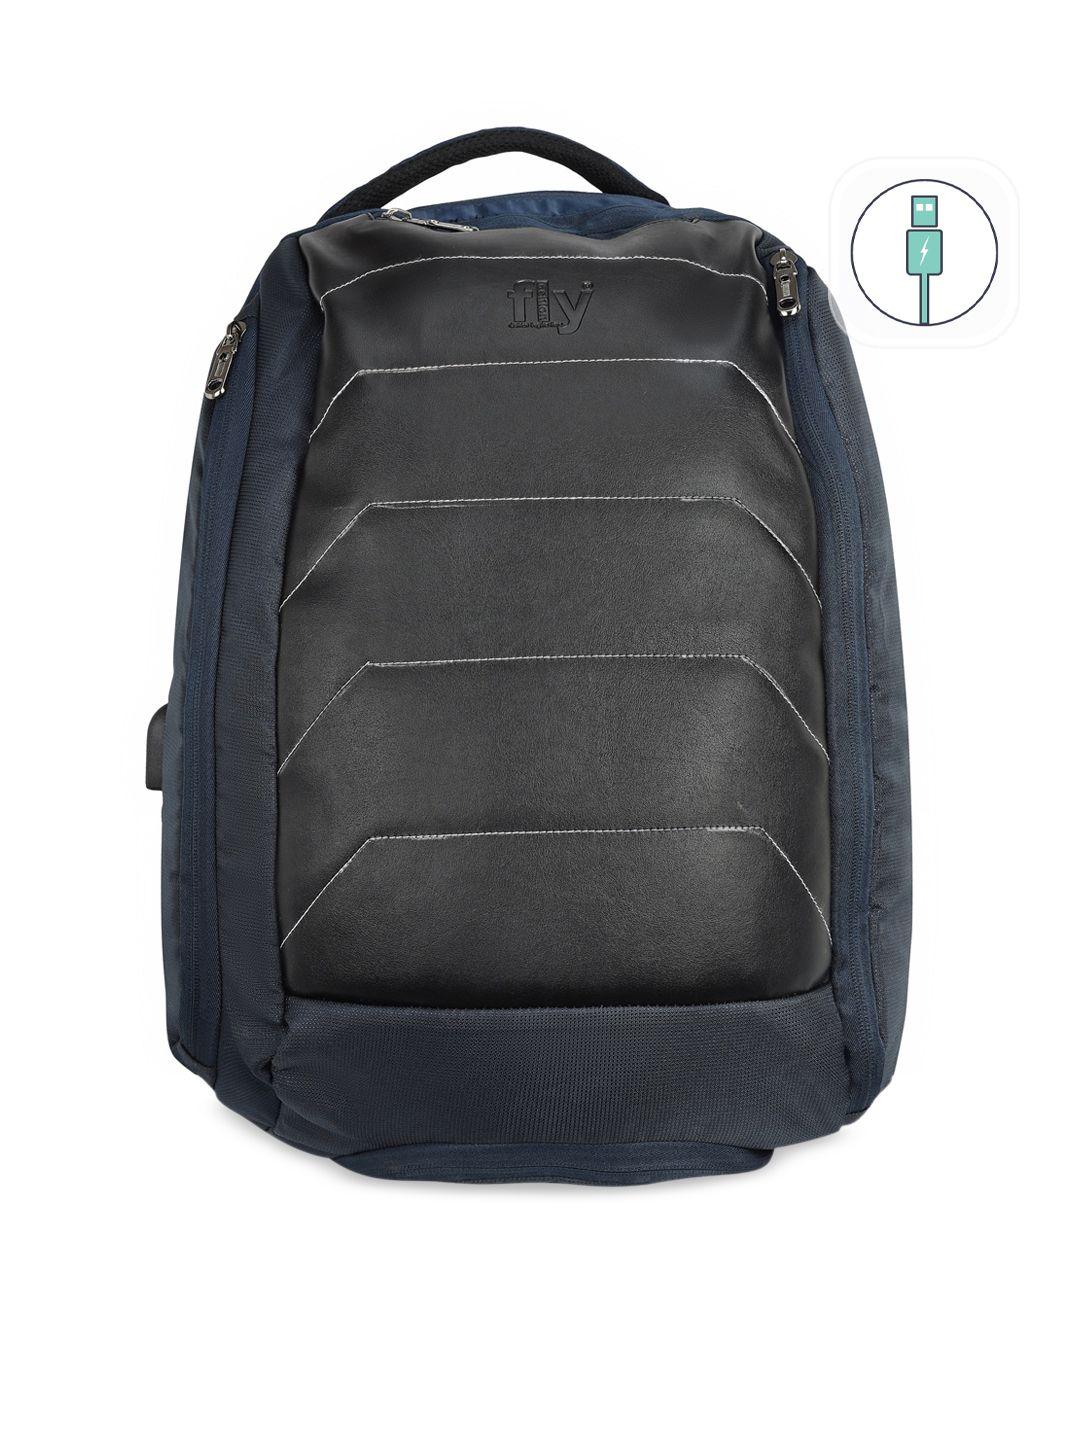 fly fashion unisex navy blue & black colourblocked backpack